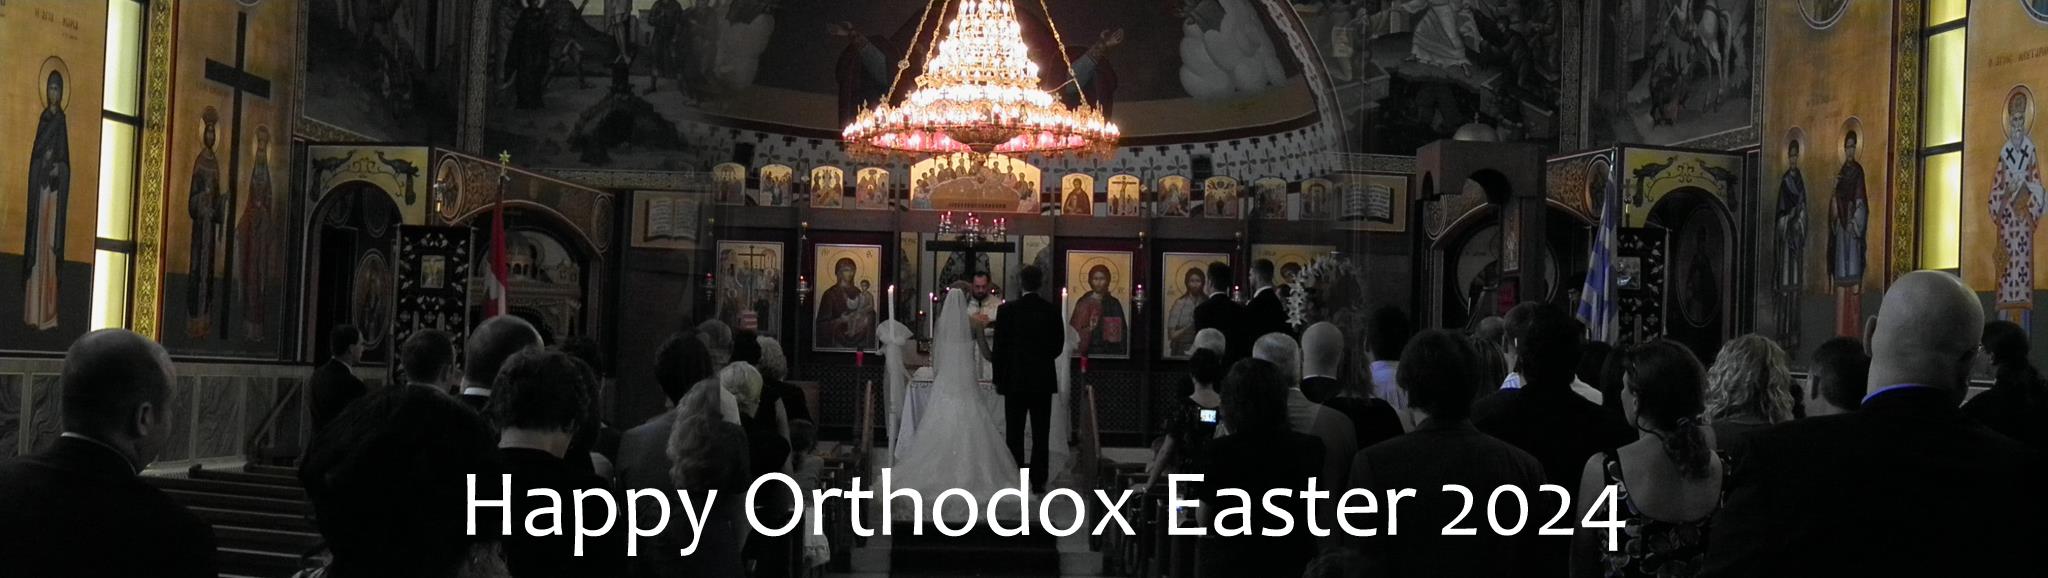 BLCF Church Happy Orthodx Easter 2024